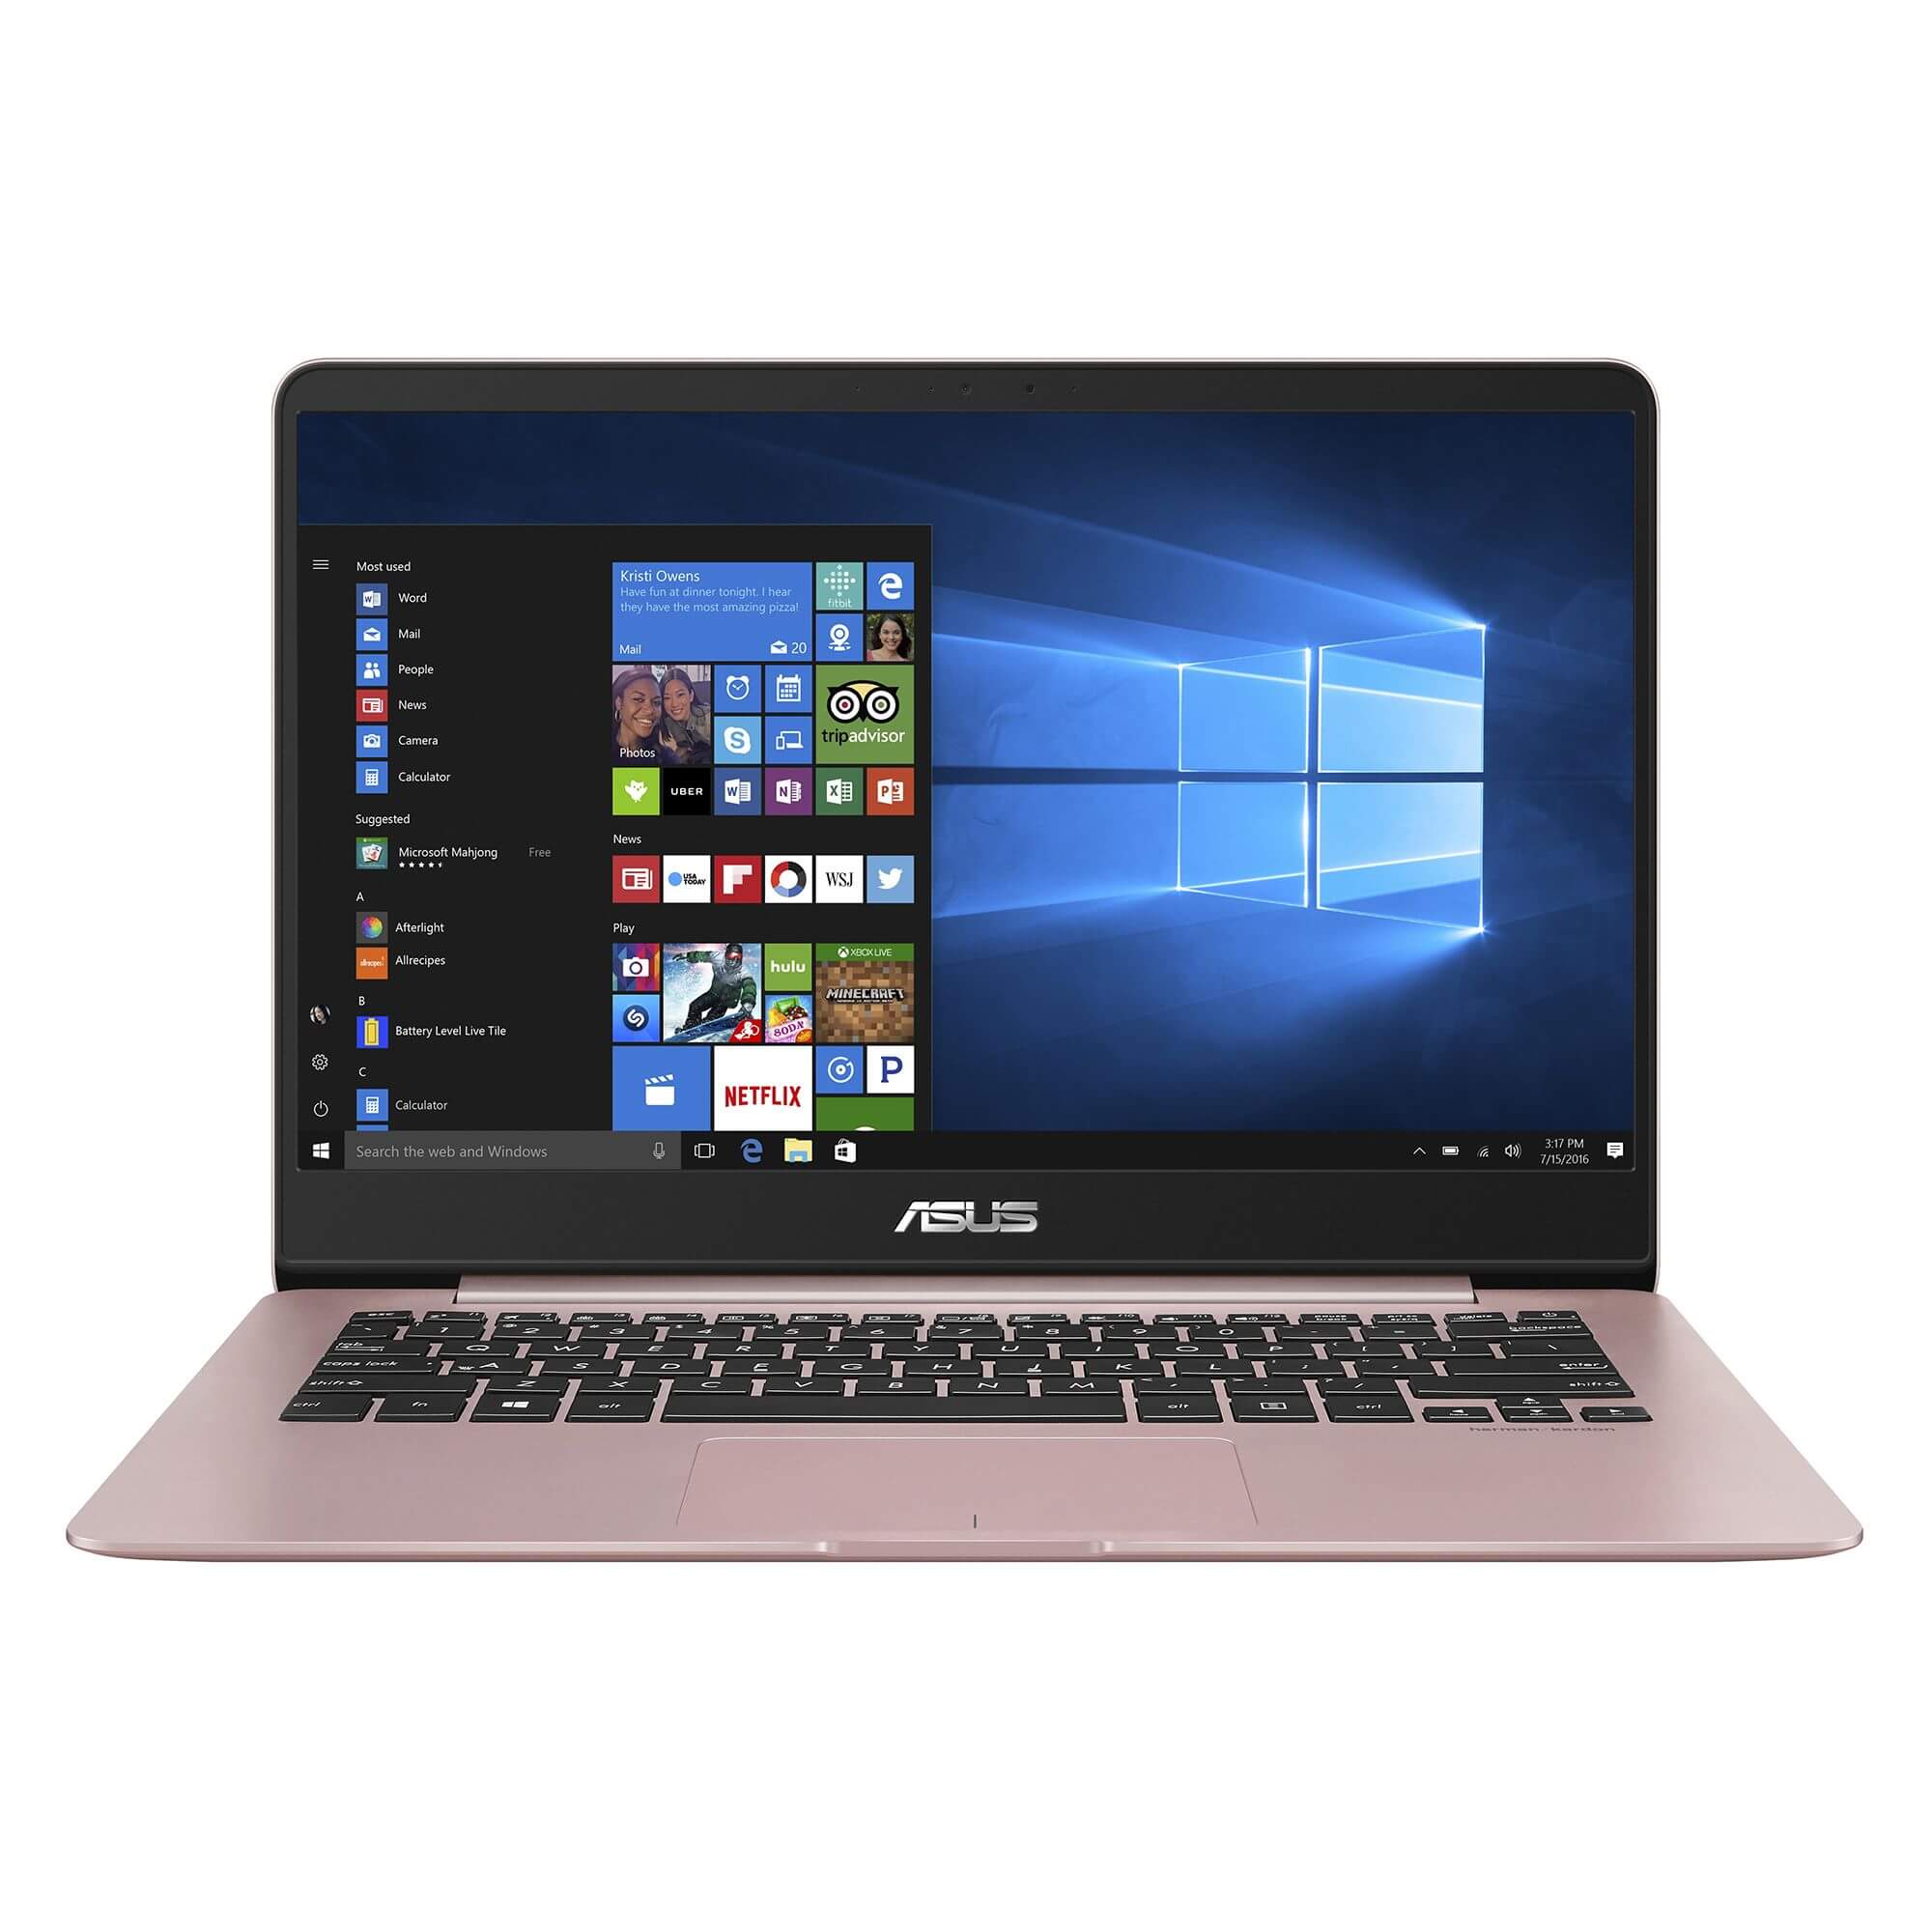 instalare windows 10 pe laptop asus nou Laptop Asus ZenBook UX430UQ-GV008T, Intel Core i5-7200U, 8GB DDR4, SSD 256GB, nVidia GeForce 940MX 2GB, Windows 10